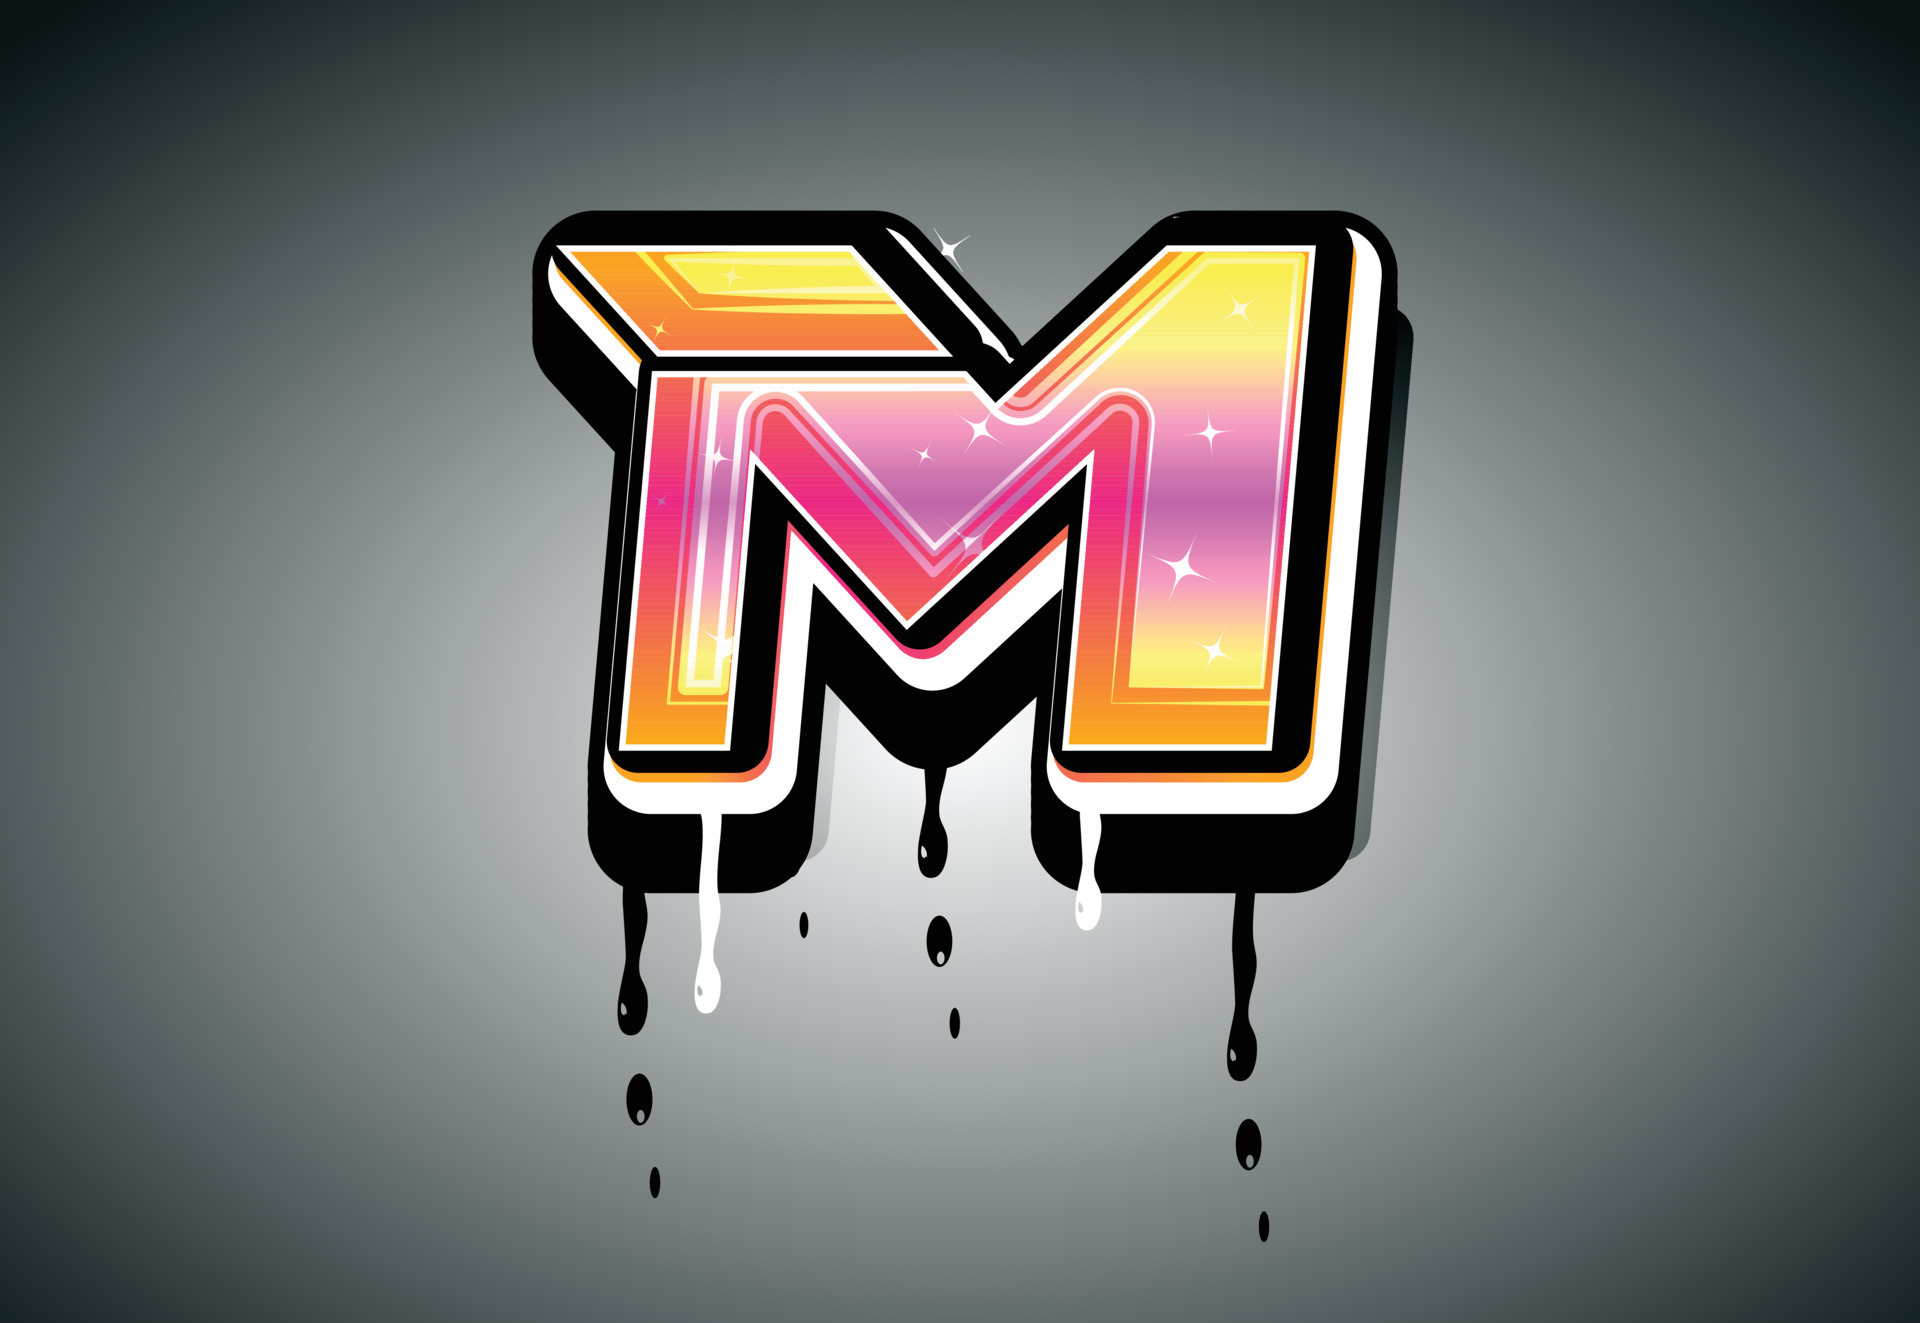 the letter m in graffiti